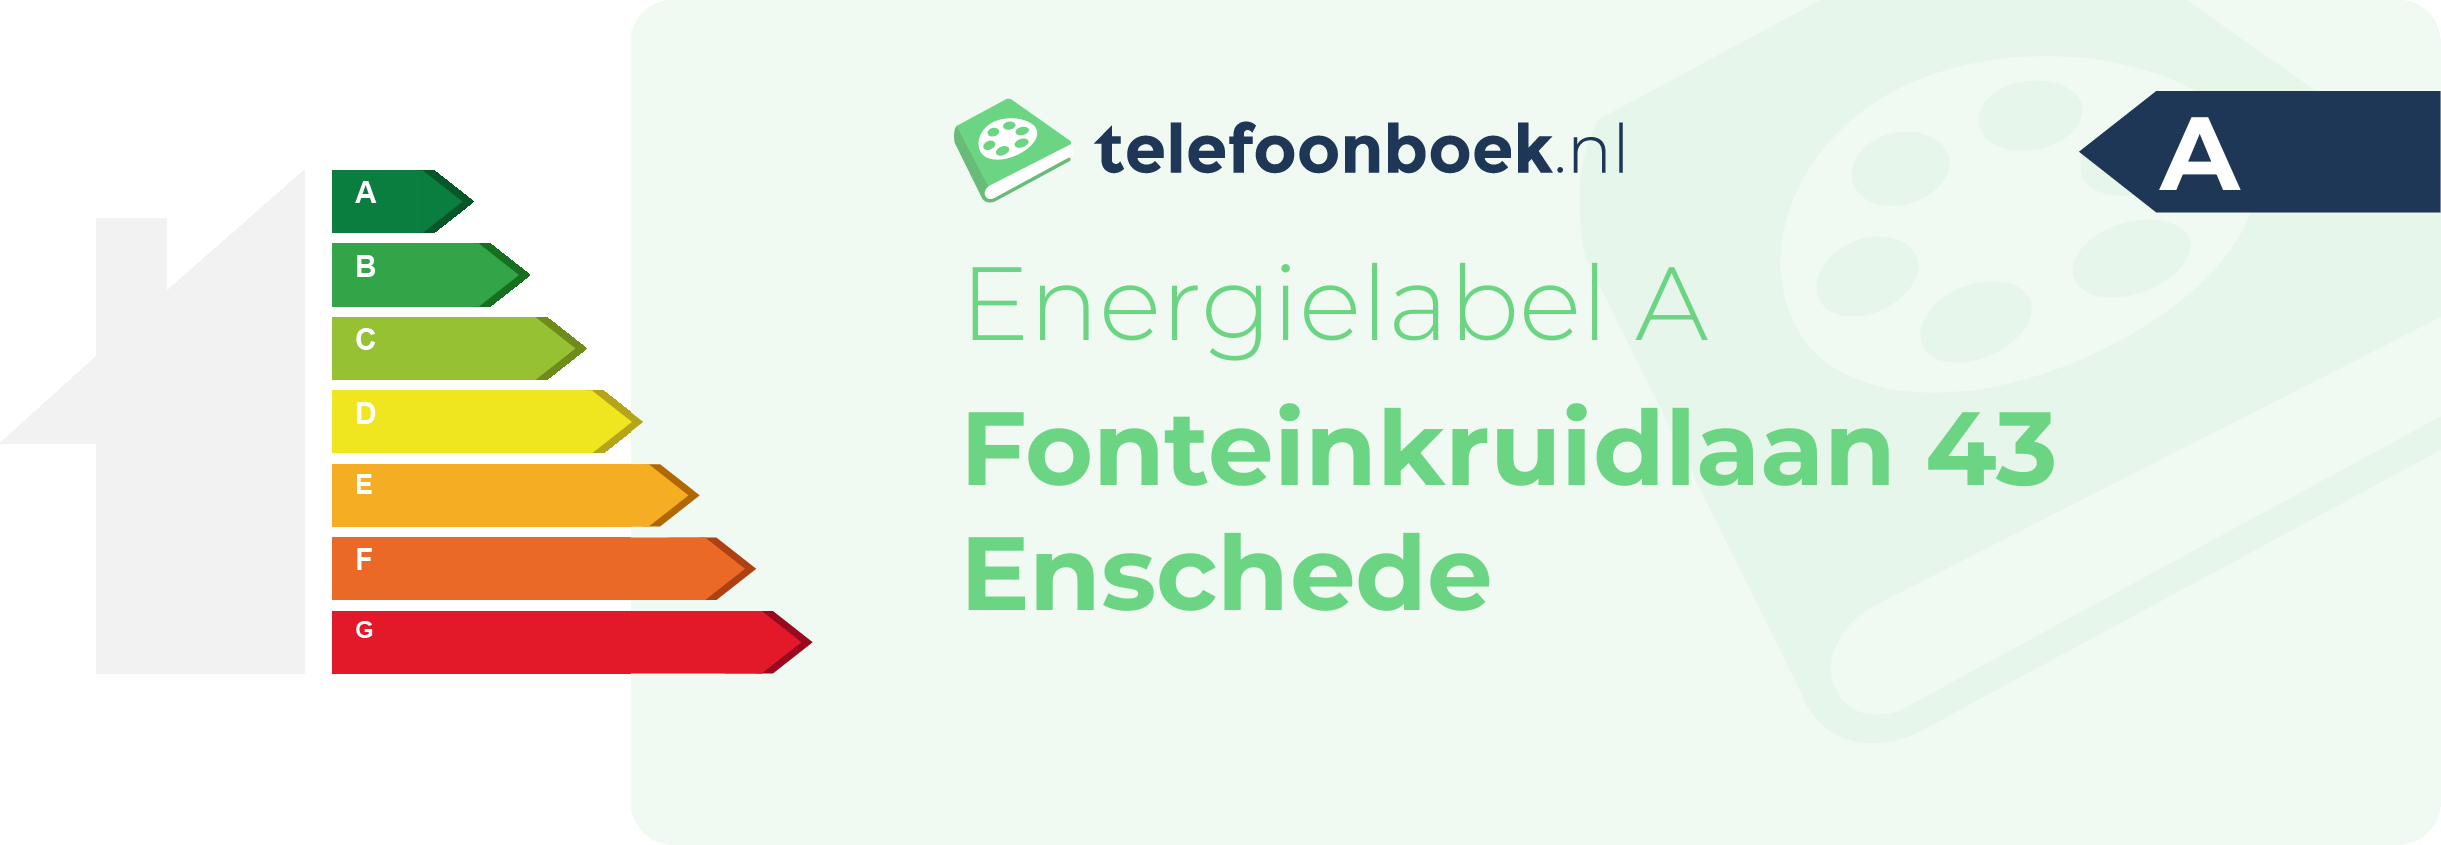 Energielabel Fonteinkruidlaan 43 Enschede